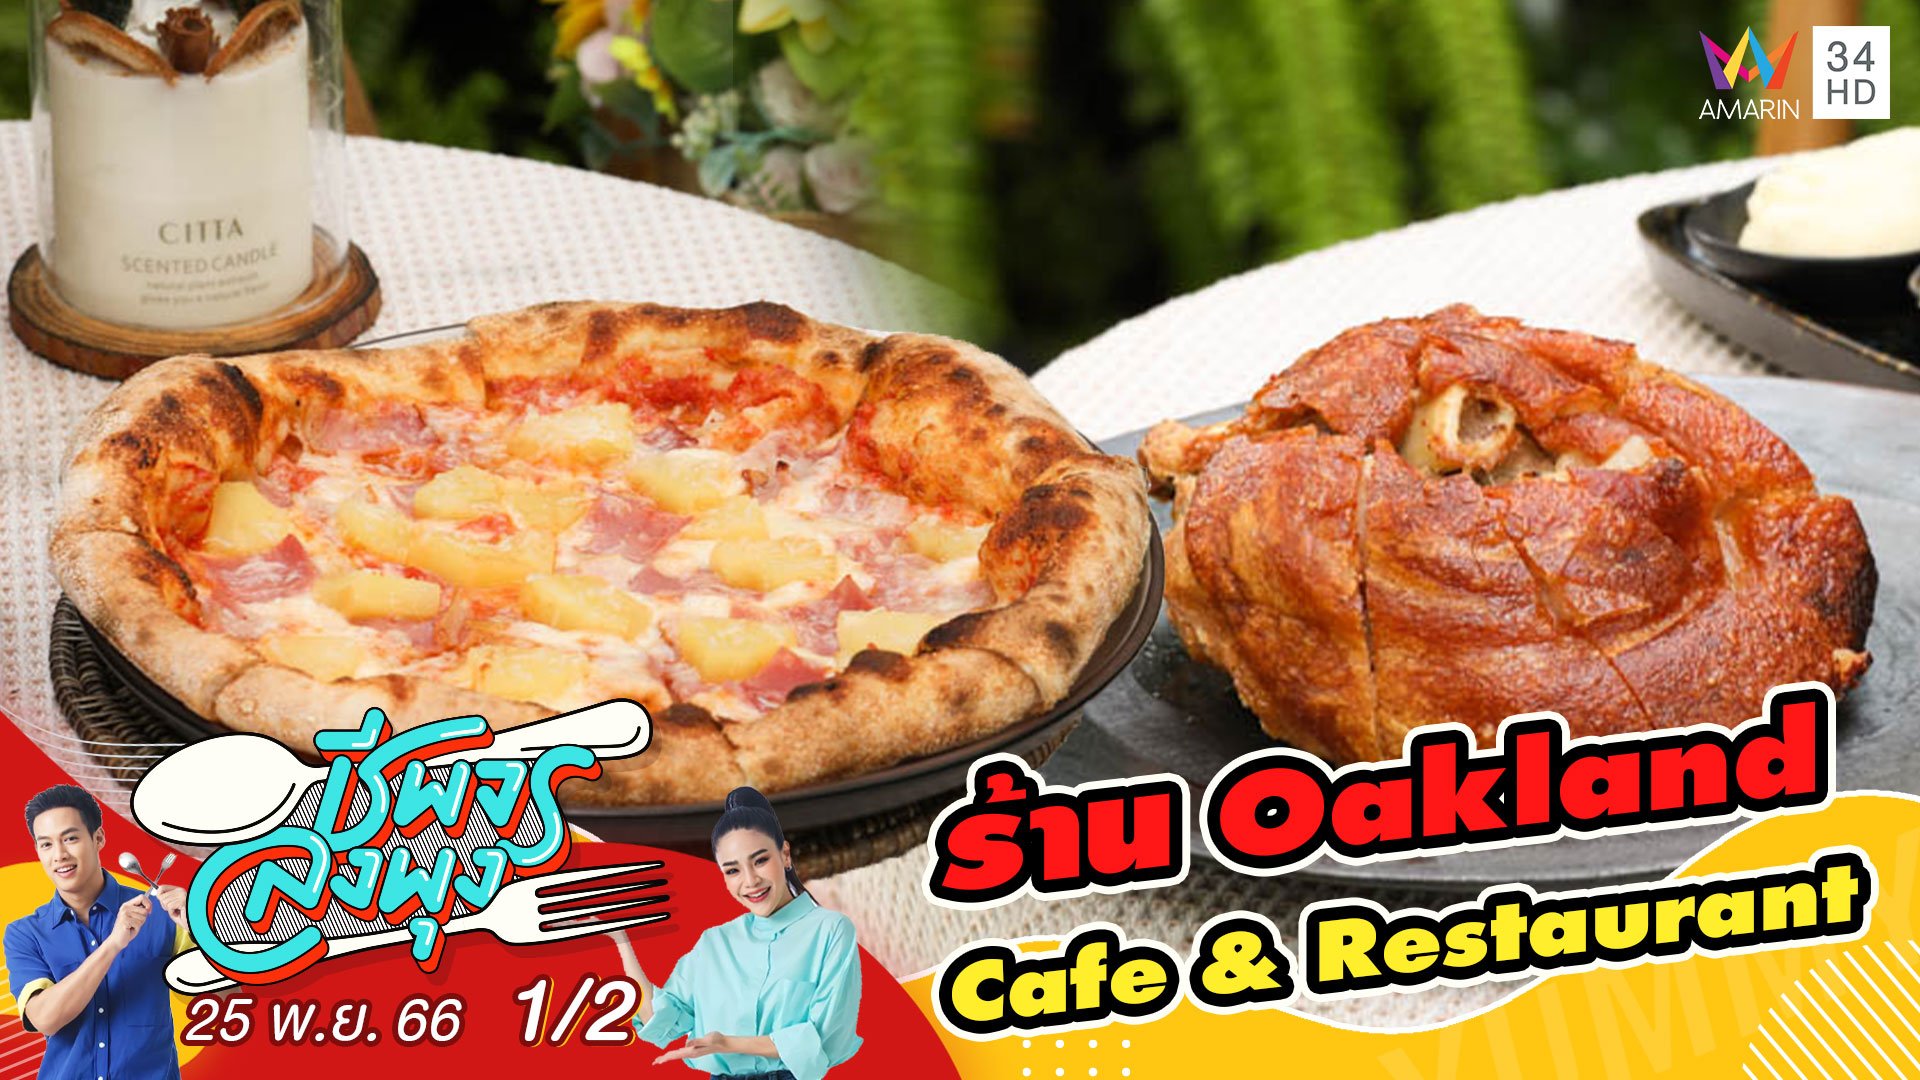 Oakland Cafe & Restaurant คาเฟ่และร้านอาหารย่านพุทธมณฑลสาย 1 | ชีพจรลงพุง | 25 พ.ย. 66 (1/2) | AMARIN TVHD34